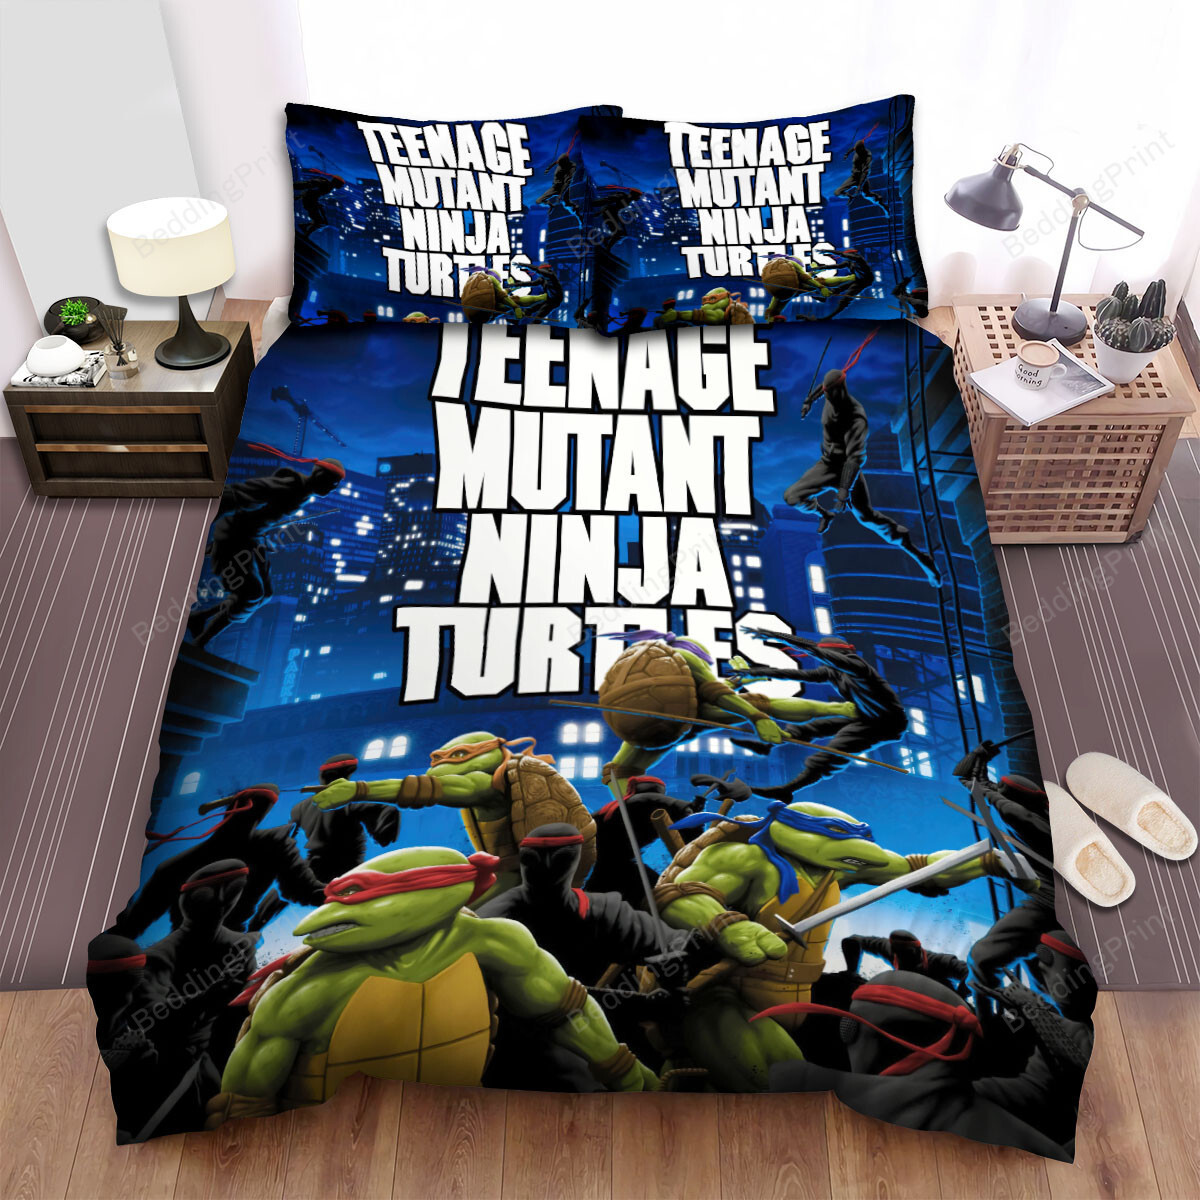 New Teengage Mutant Ninja Turtles Kids Single Doona Quilt Cover & Pillowcase 